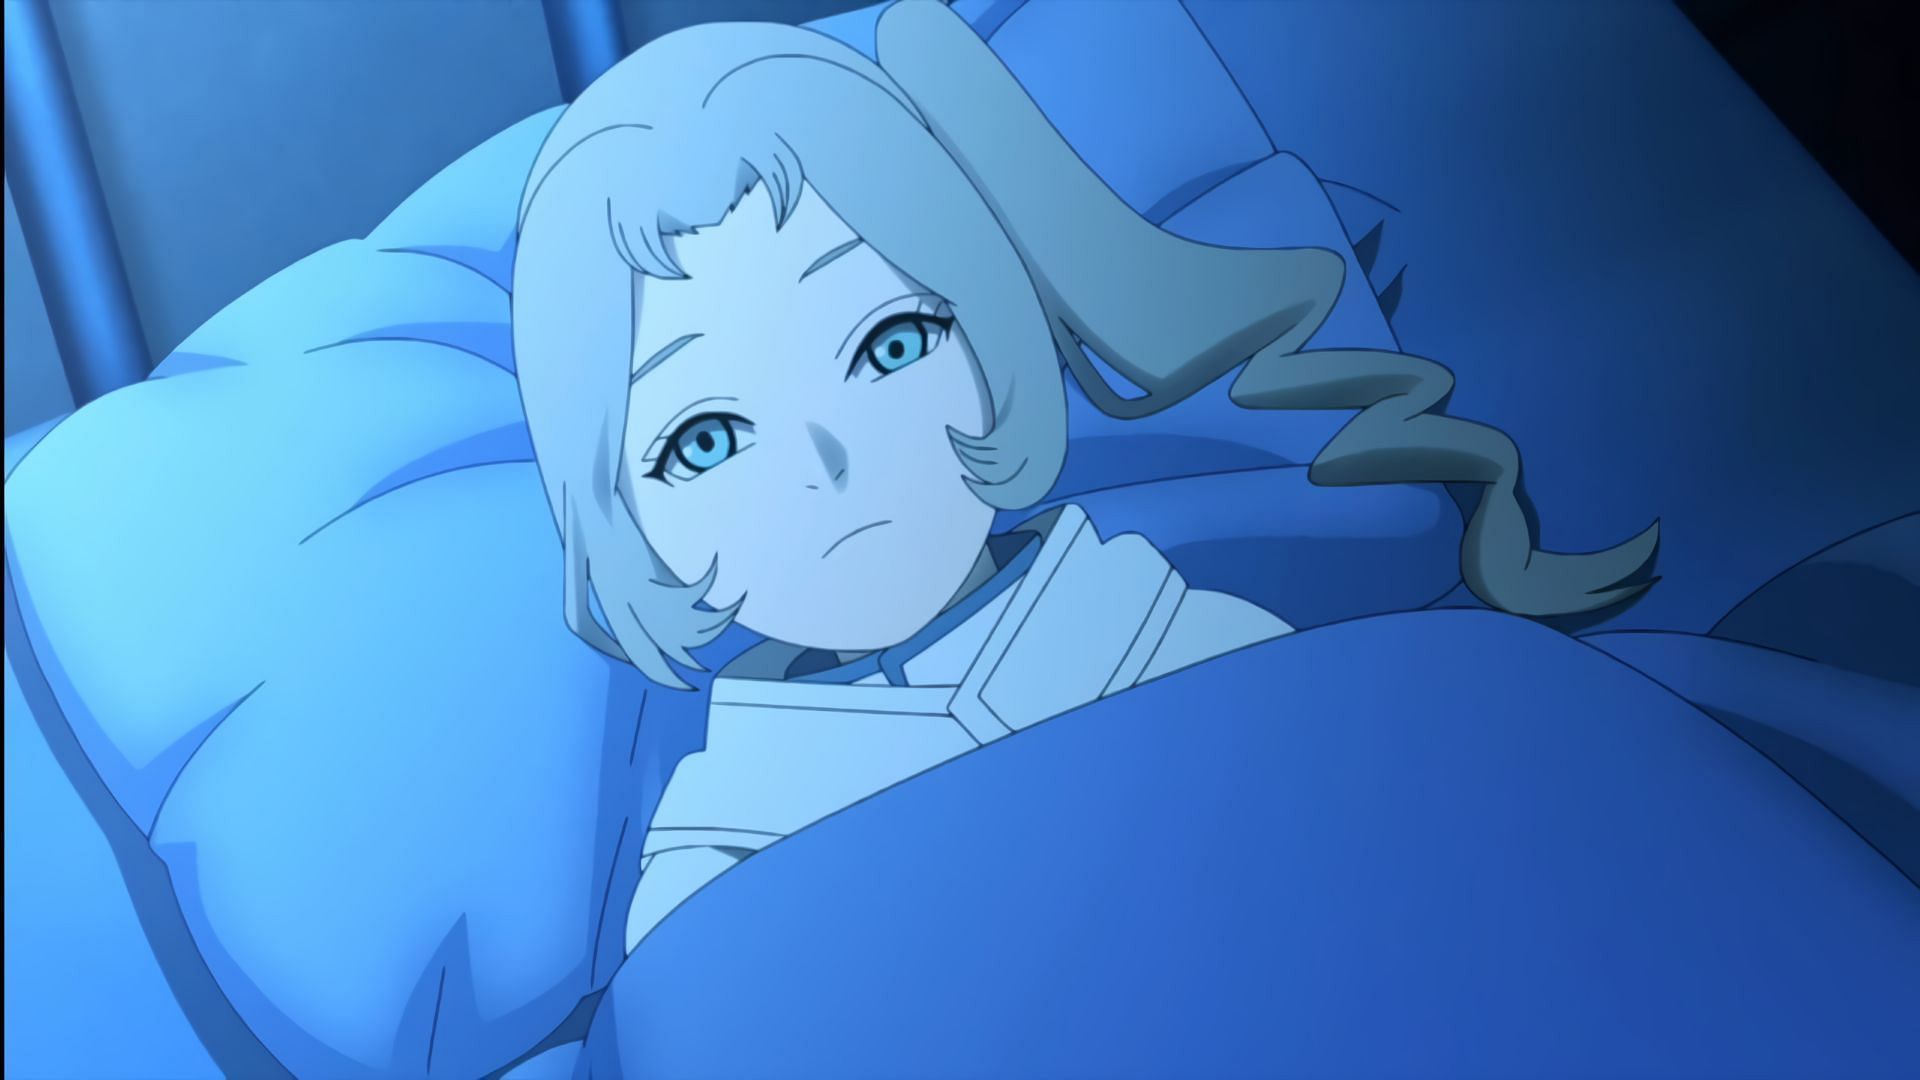 Kae waking up in Boruto episode 268 (Image via Studio Pierrot)